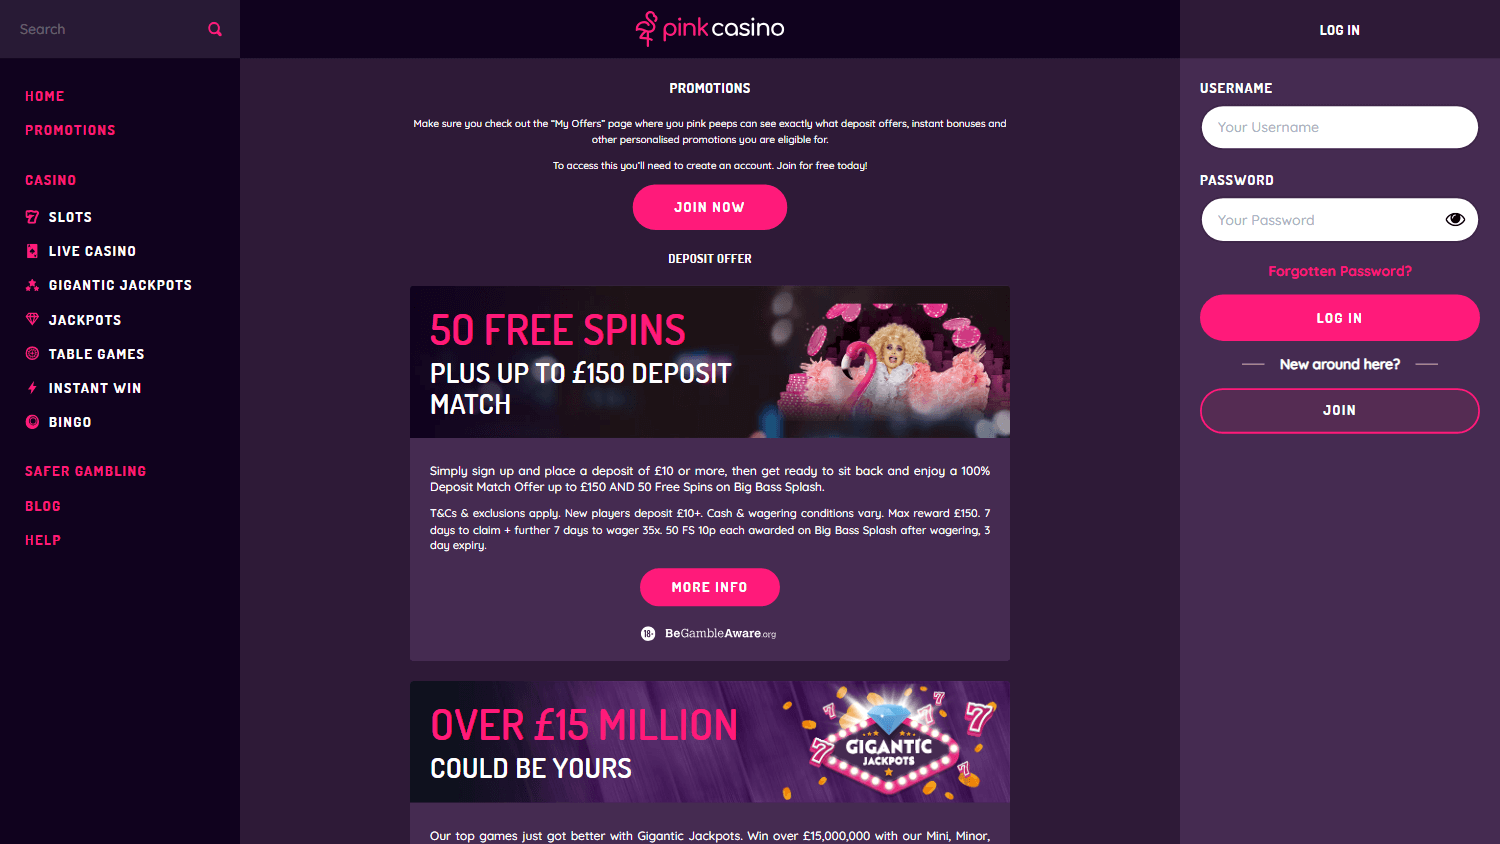 pink_casino_promotions_desktop